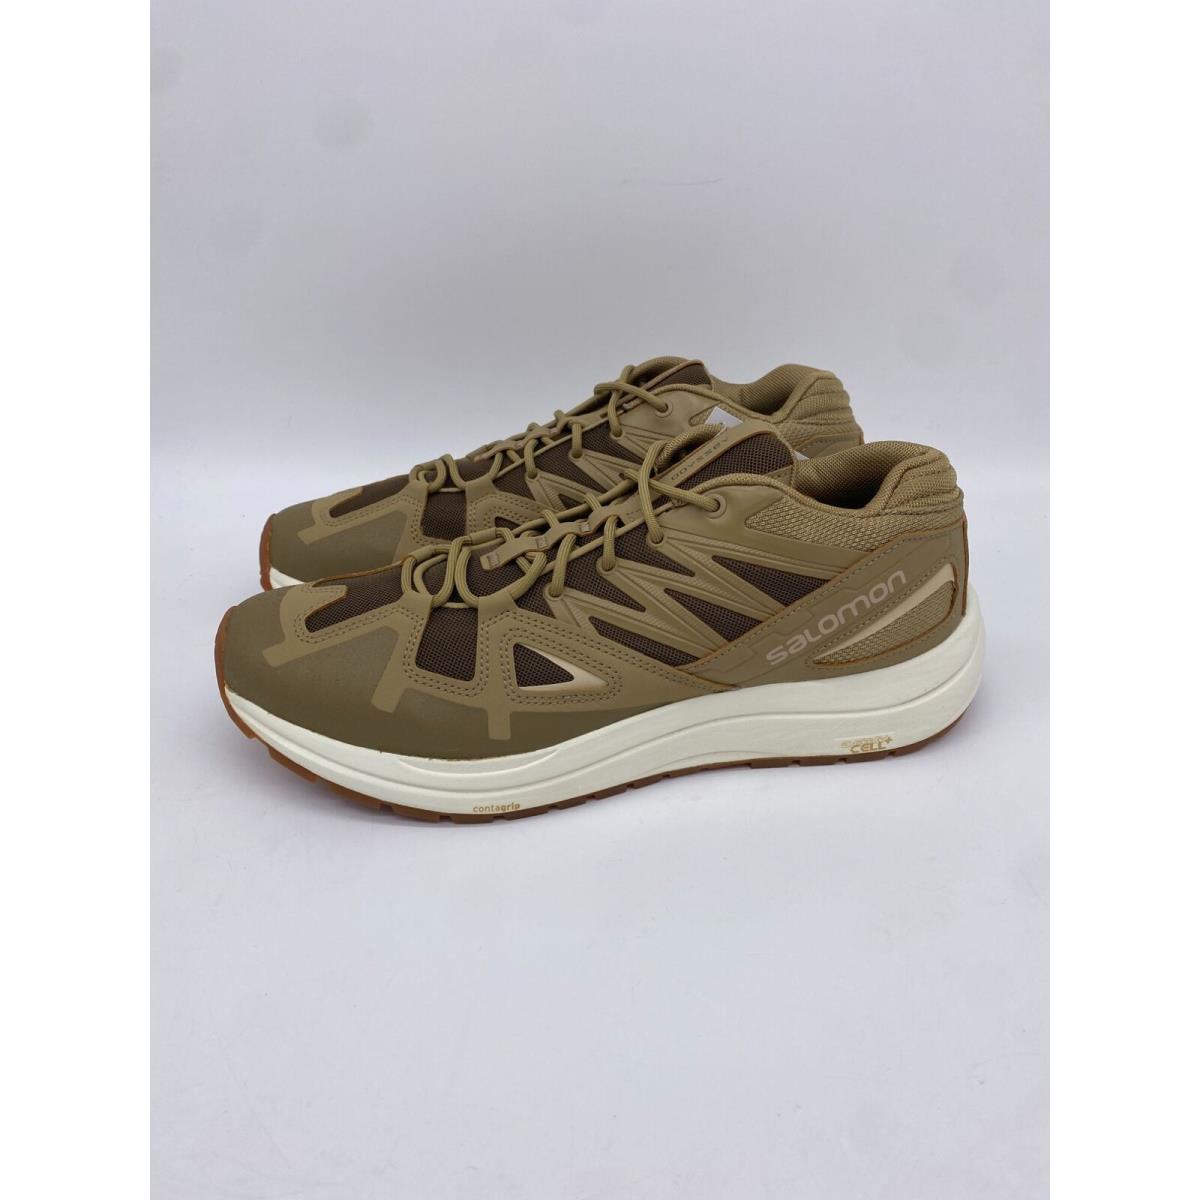 Salomon shoes Hiking - kelp/desert palm/vanilla ice 0